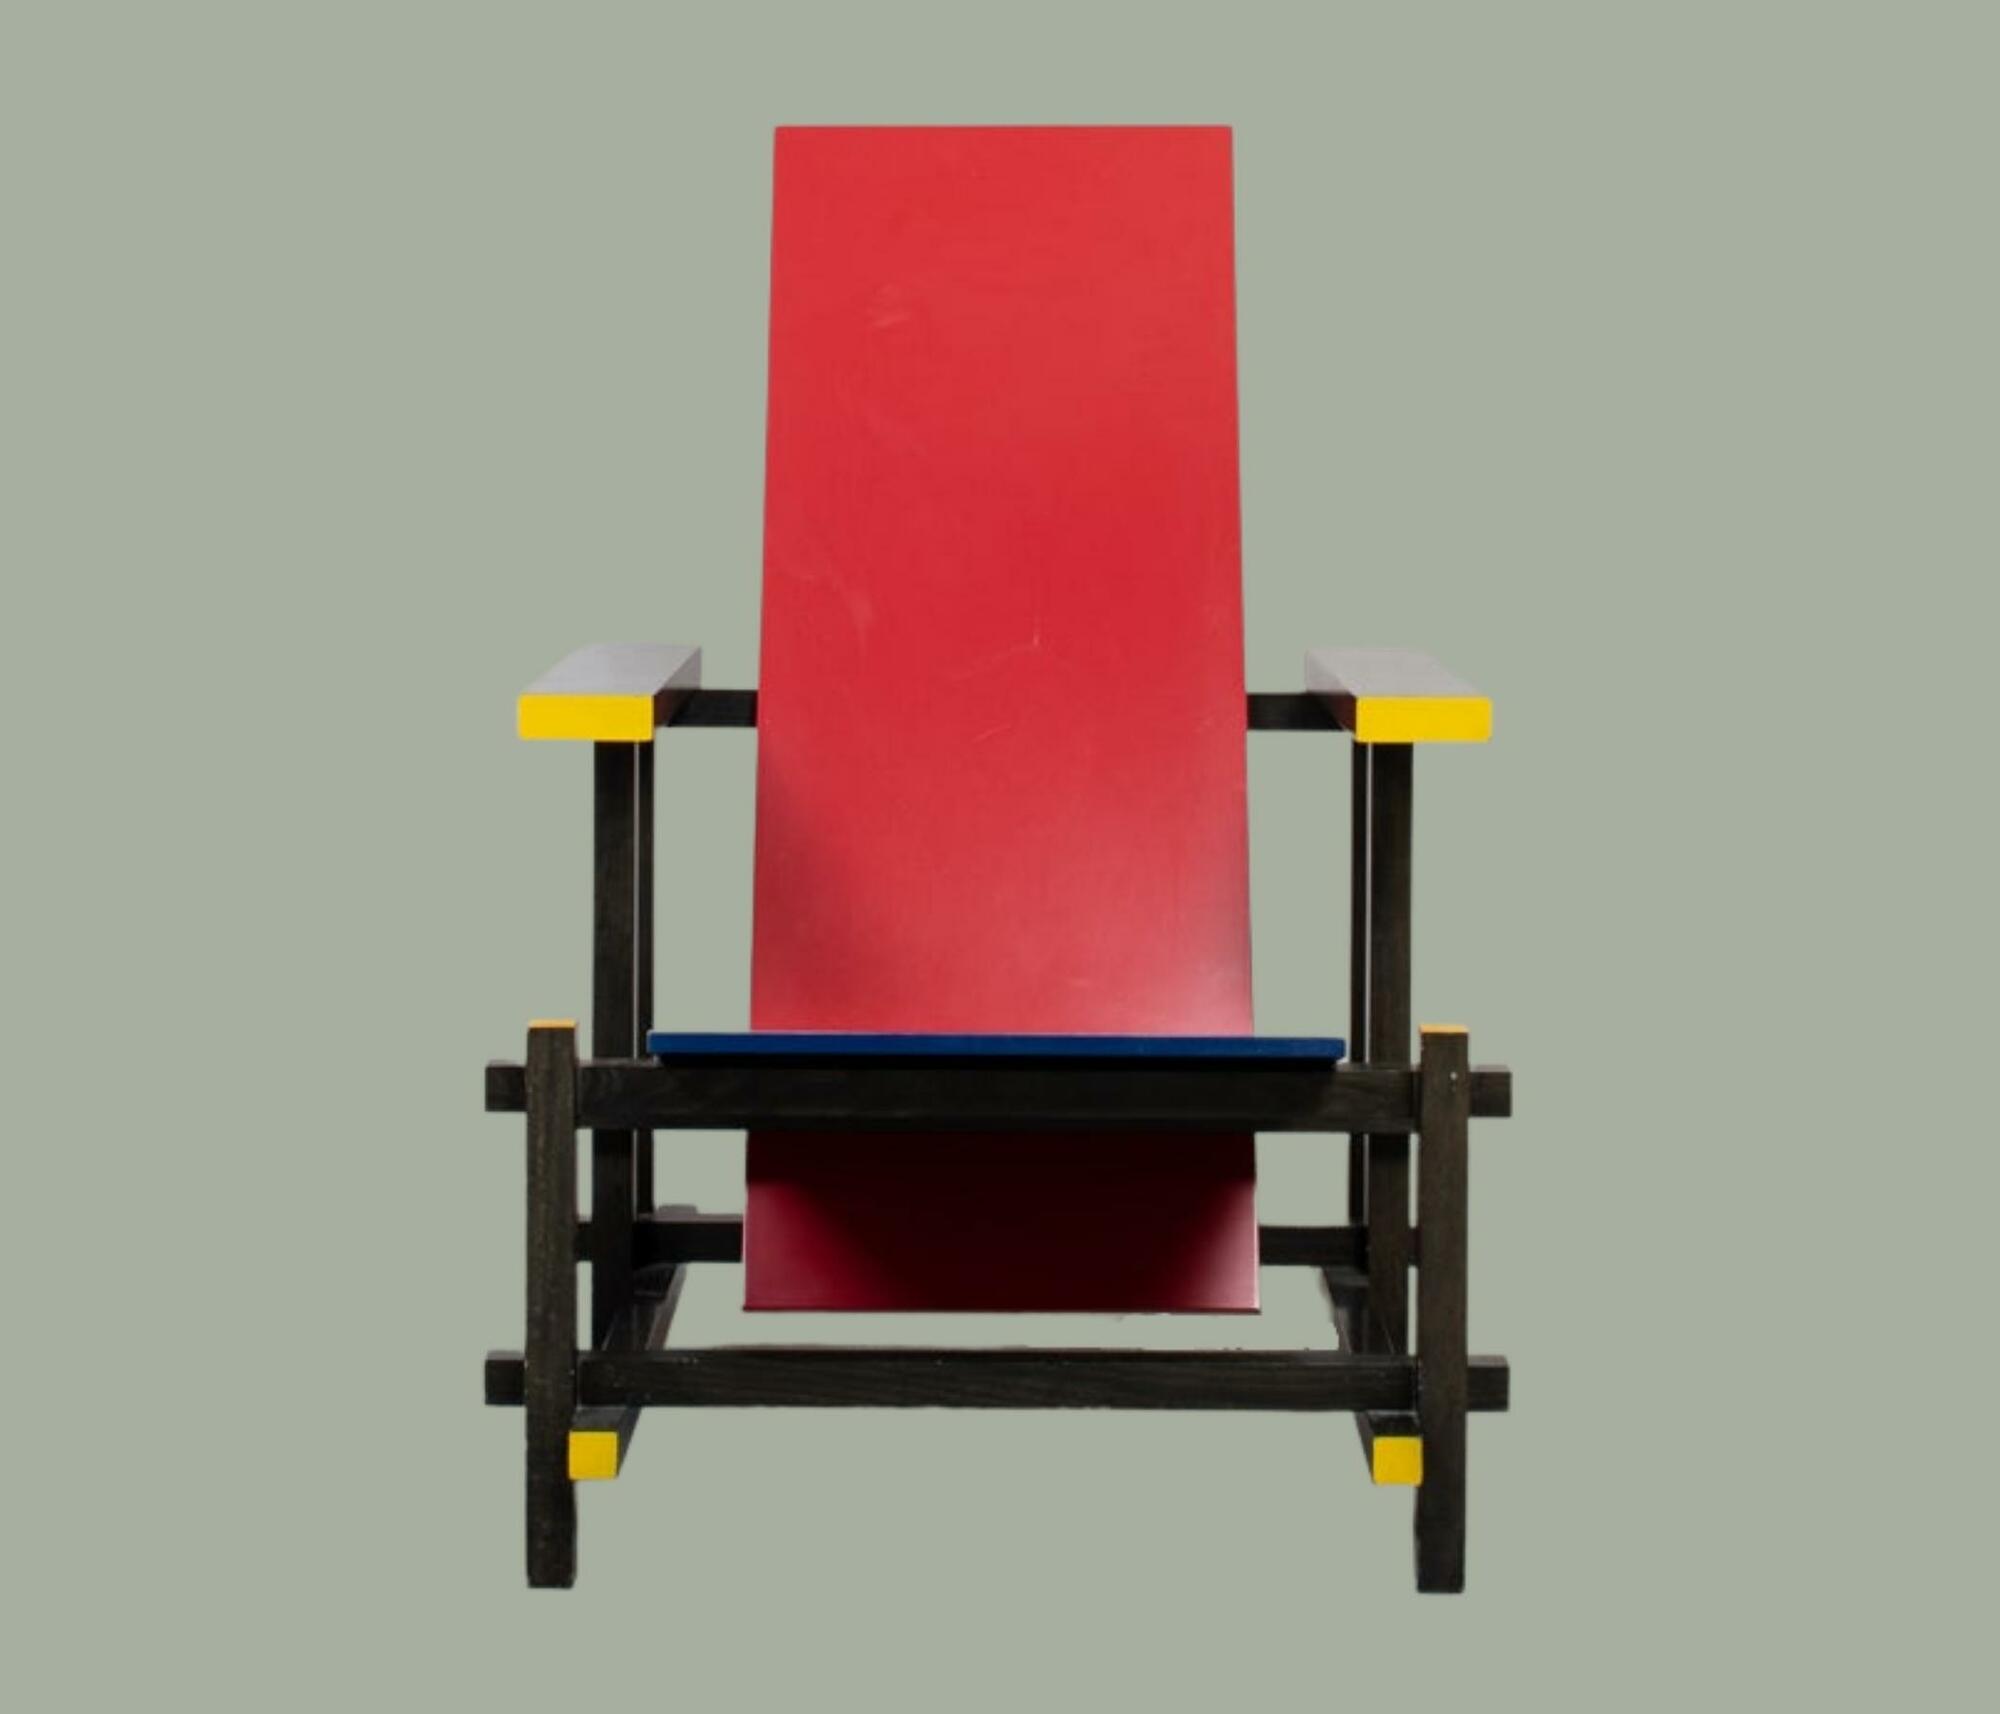 Cassina Red & Blue Chair Gerrit T. Rietveld 2